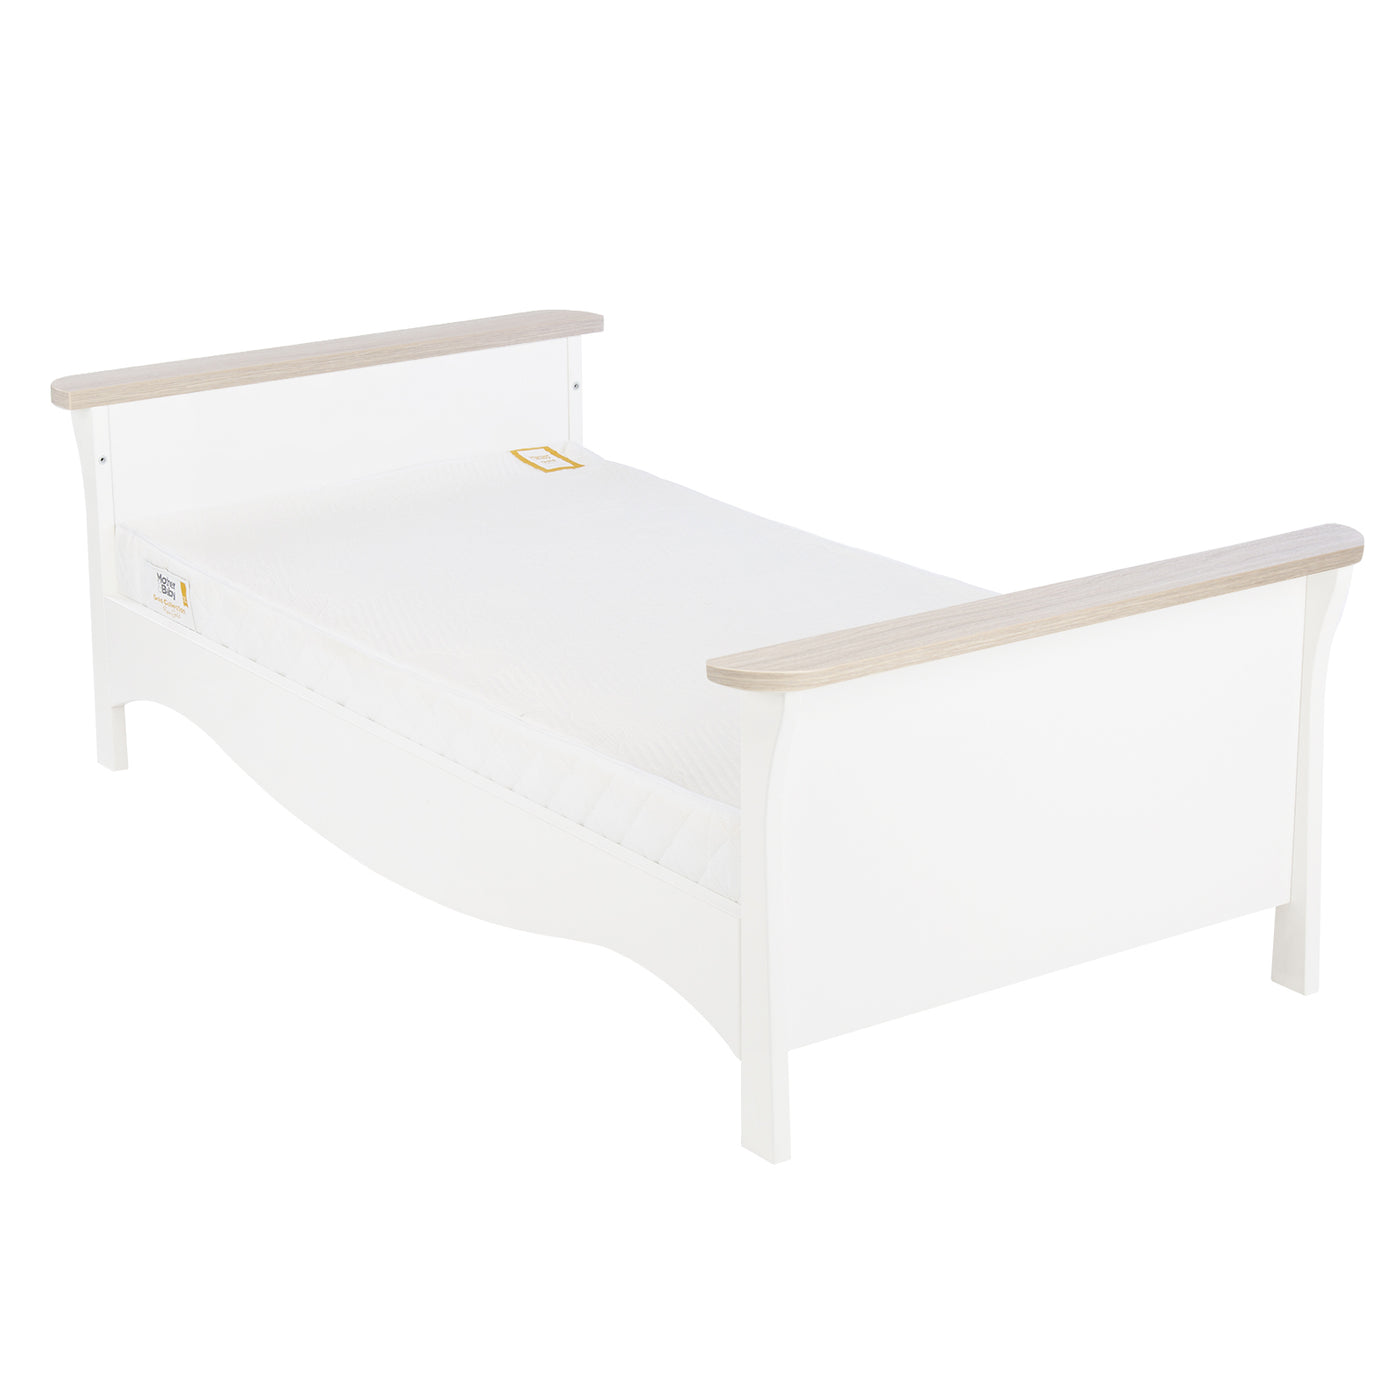 CuddleCo Clara Cot Bed - White/Ash